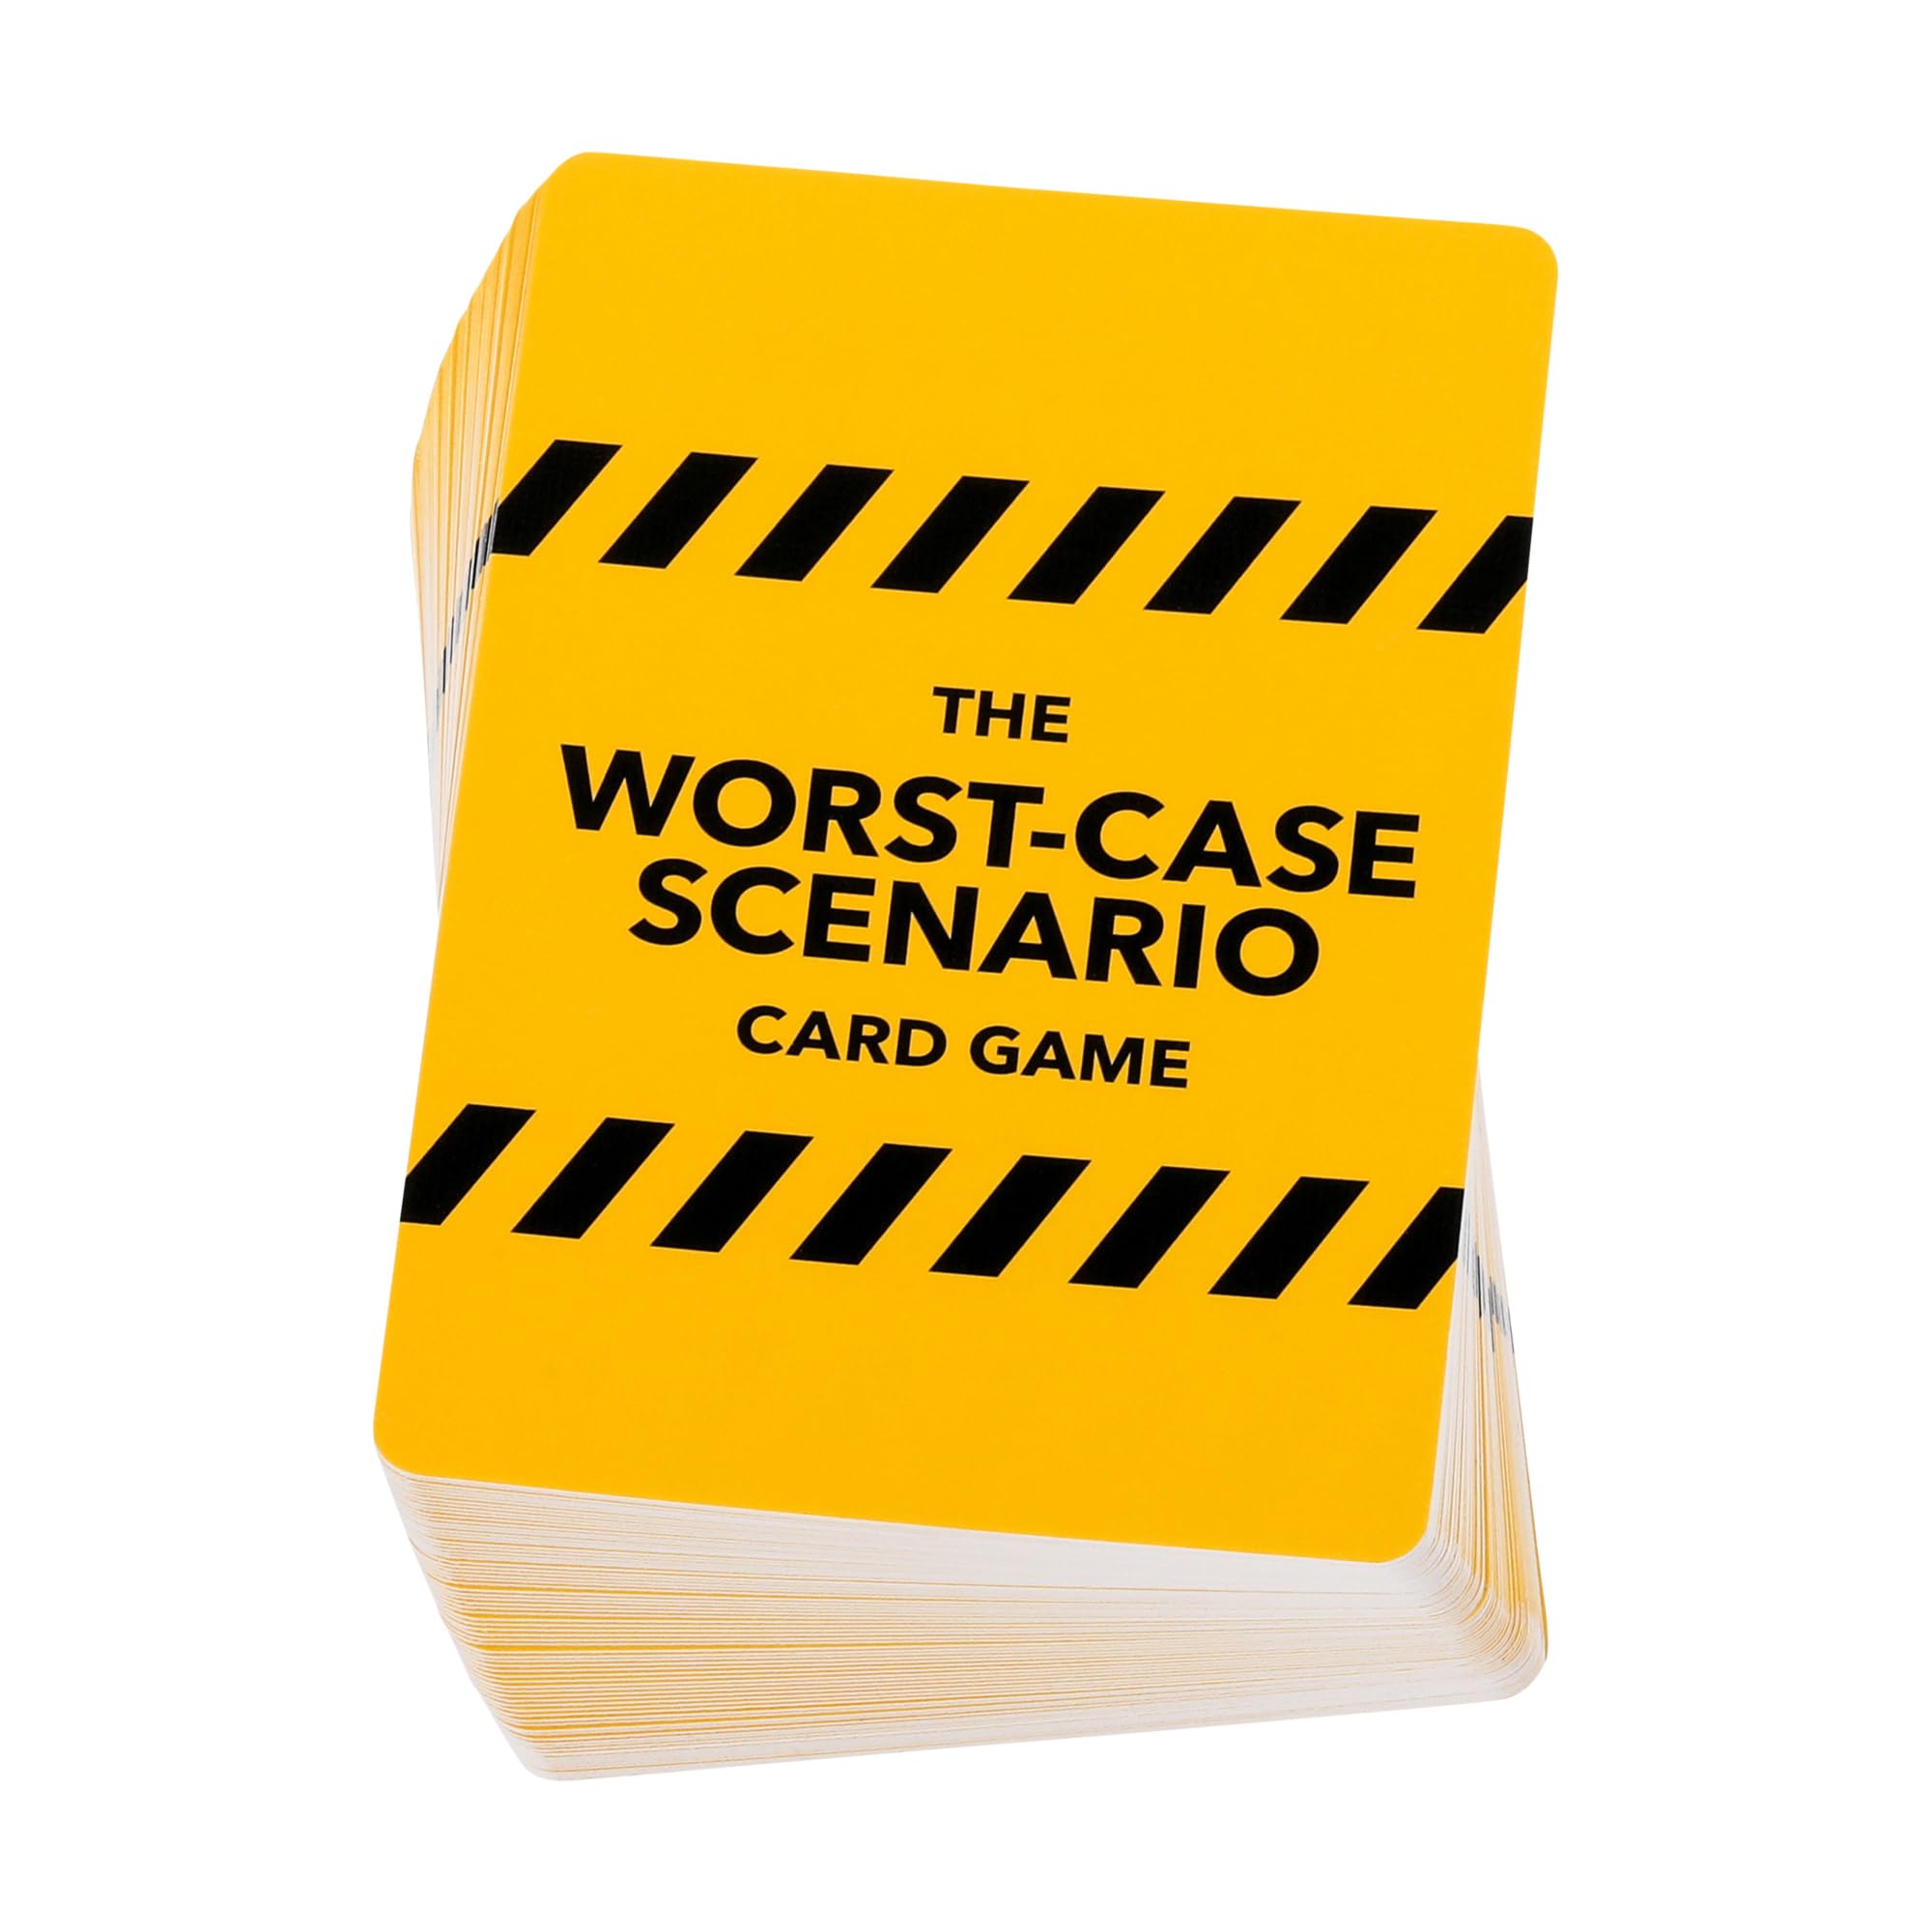 Spontuneous The Worst-CASE Scenario Card Game - All New Family/Party Game | 0% Trivia, 100% Humorous Fun